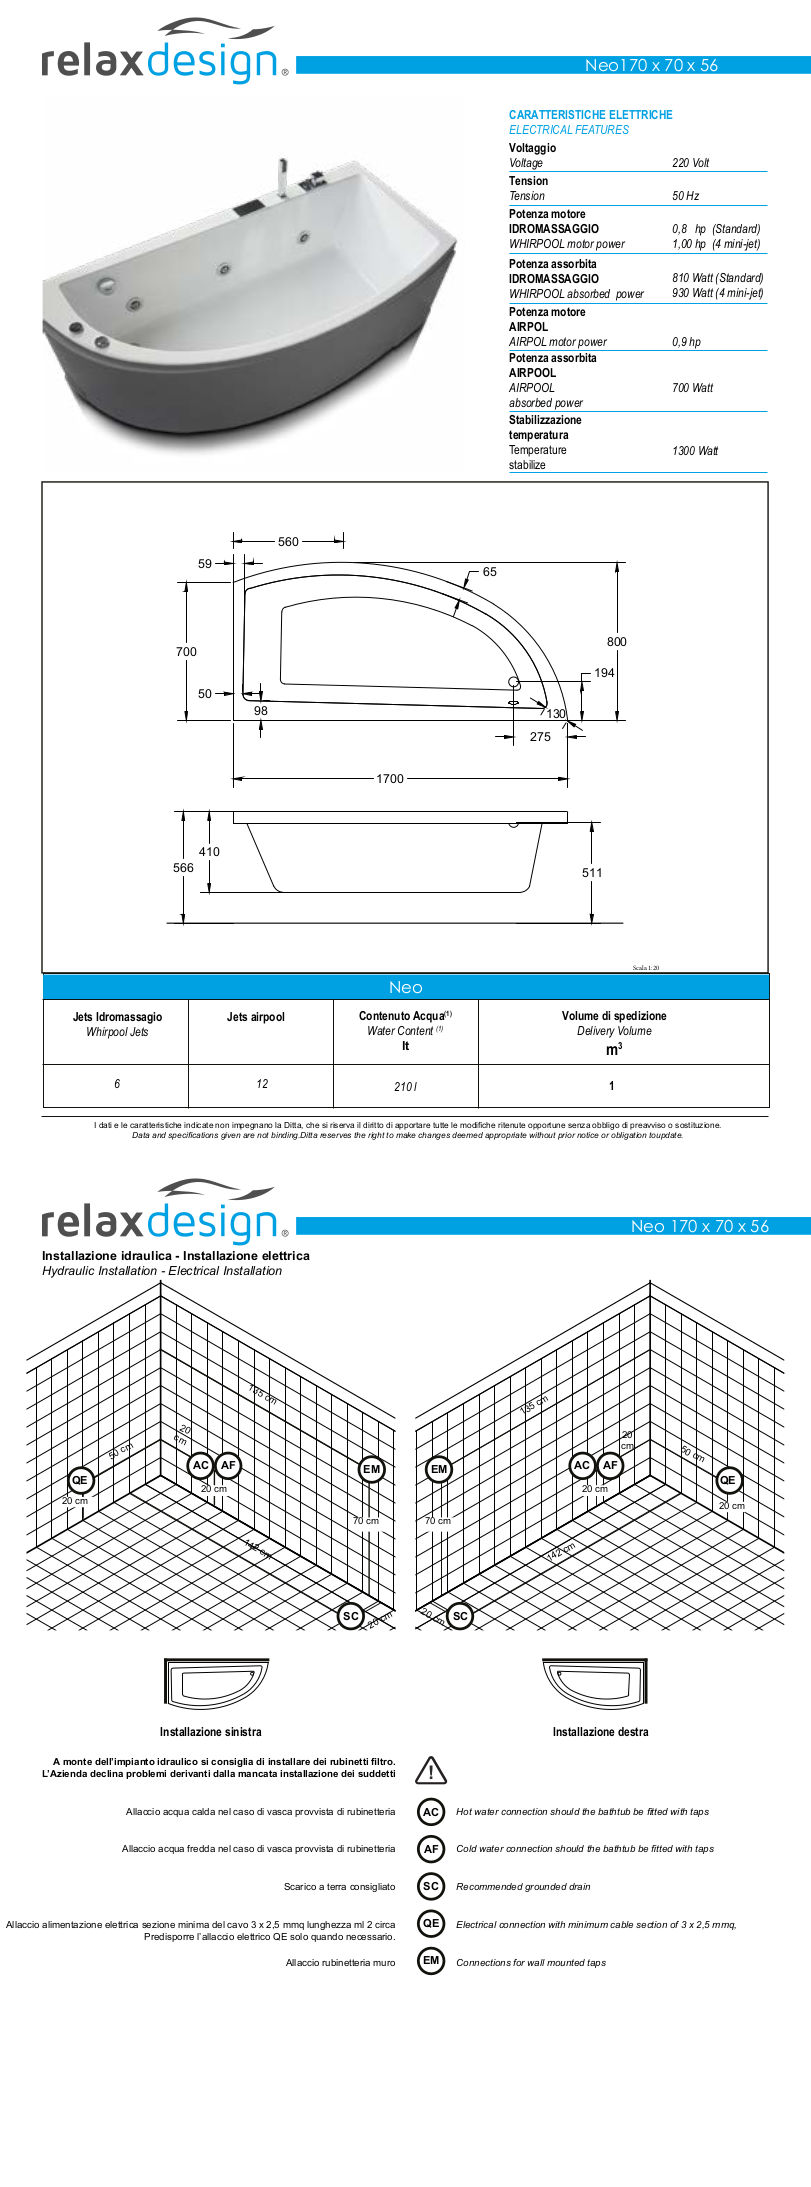 neo relax design bathtub data sheet